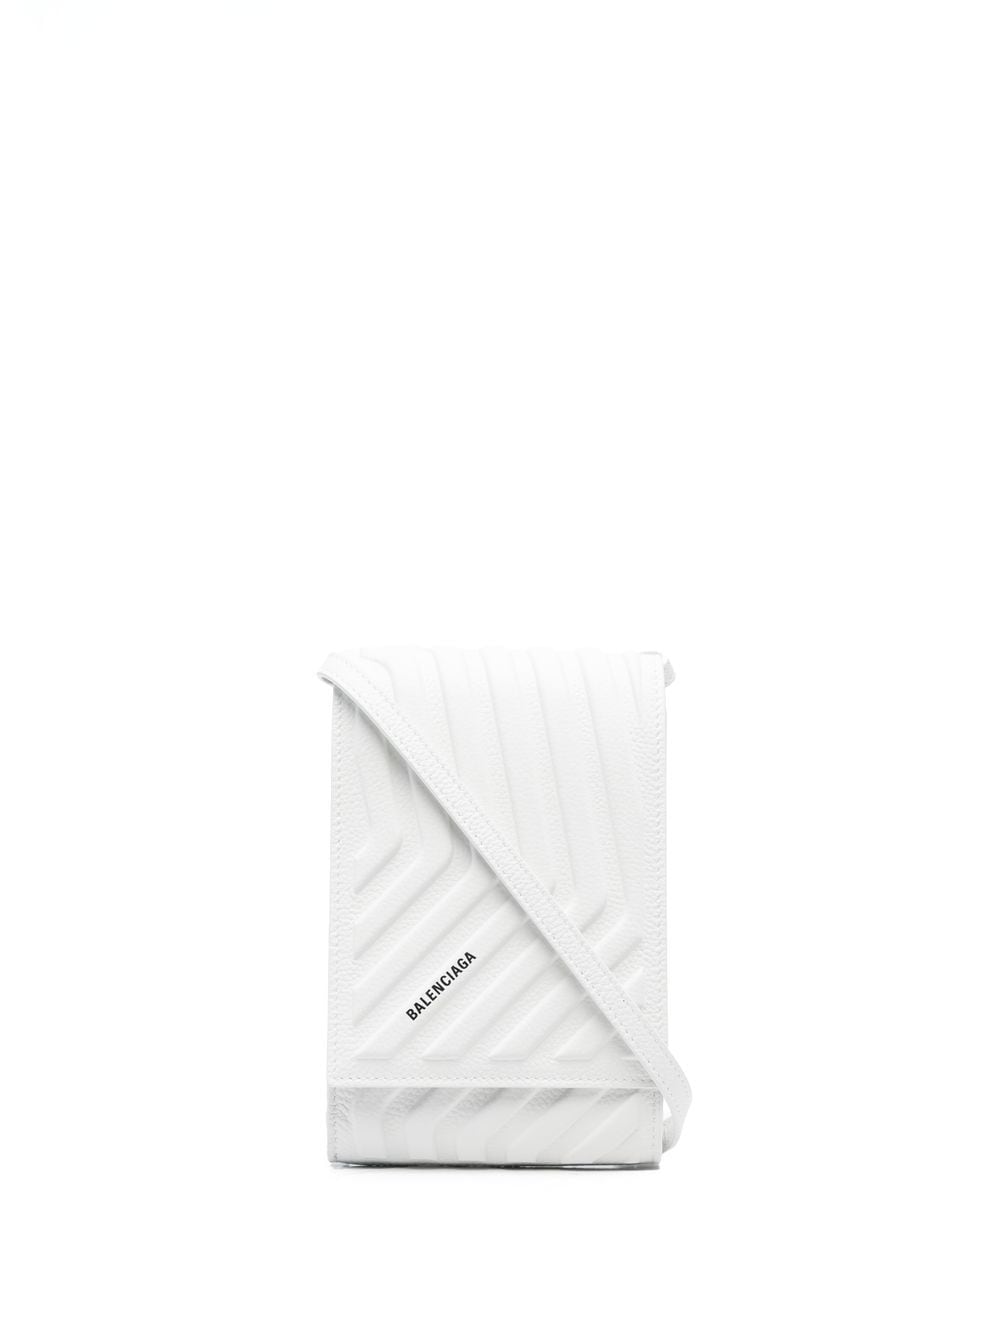 Balenciaga logo-print leather shoulder bag - White